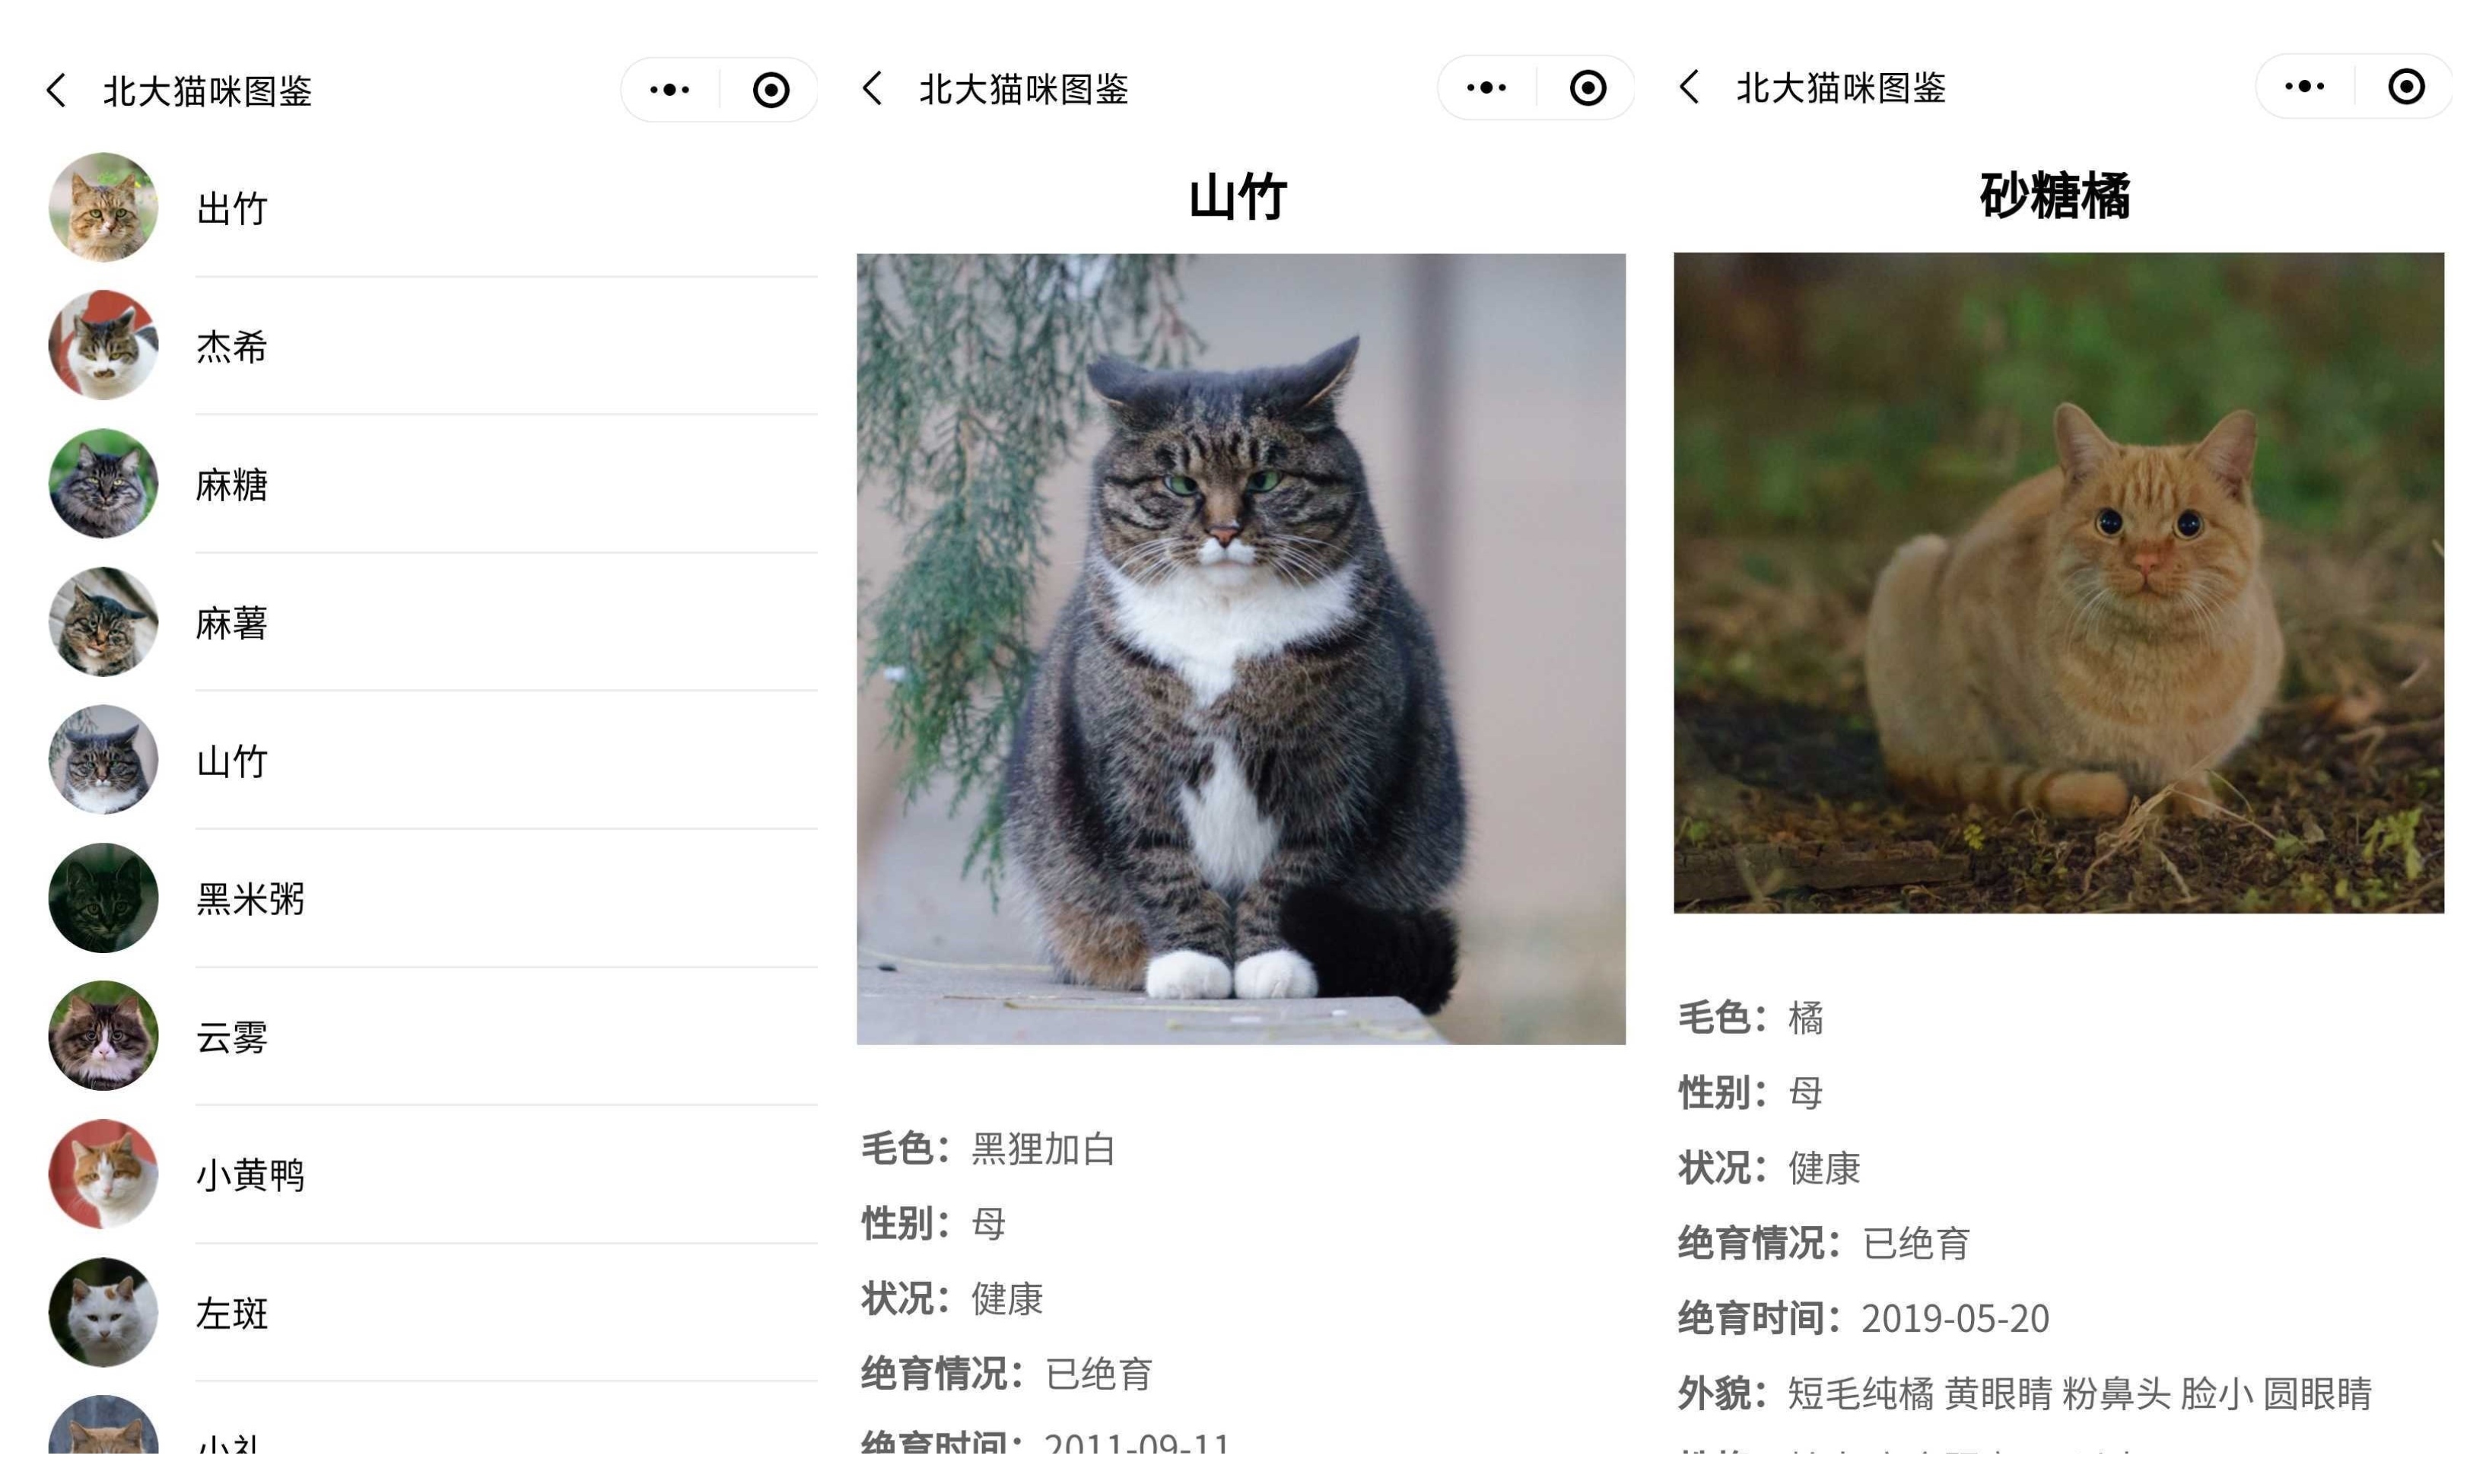 This WeChat mini program logs interesting details about Peking University’s stray cats. (Picture: Yan Yuan Mao)